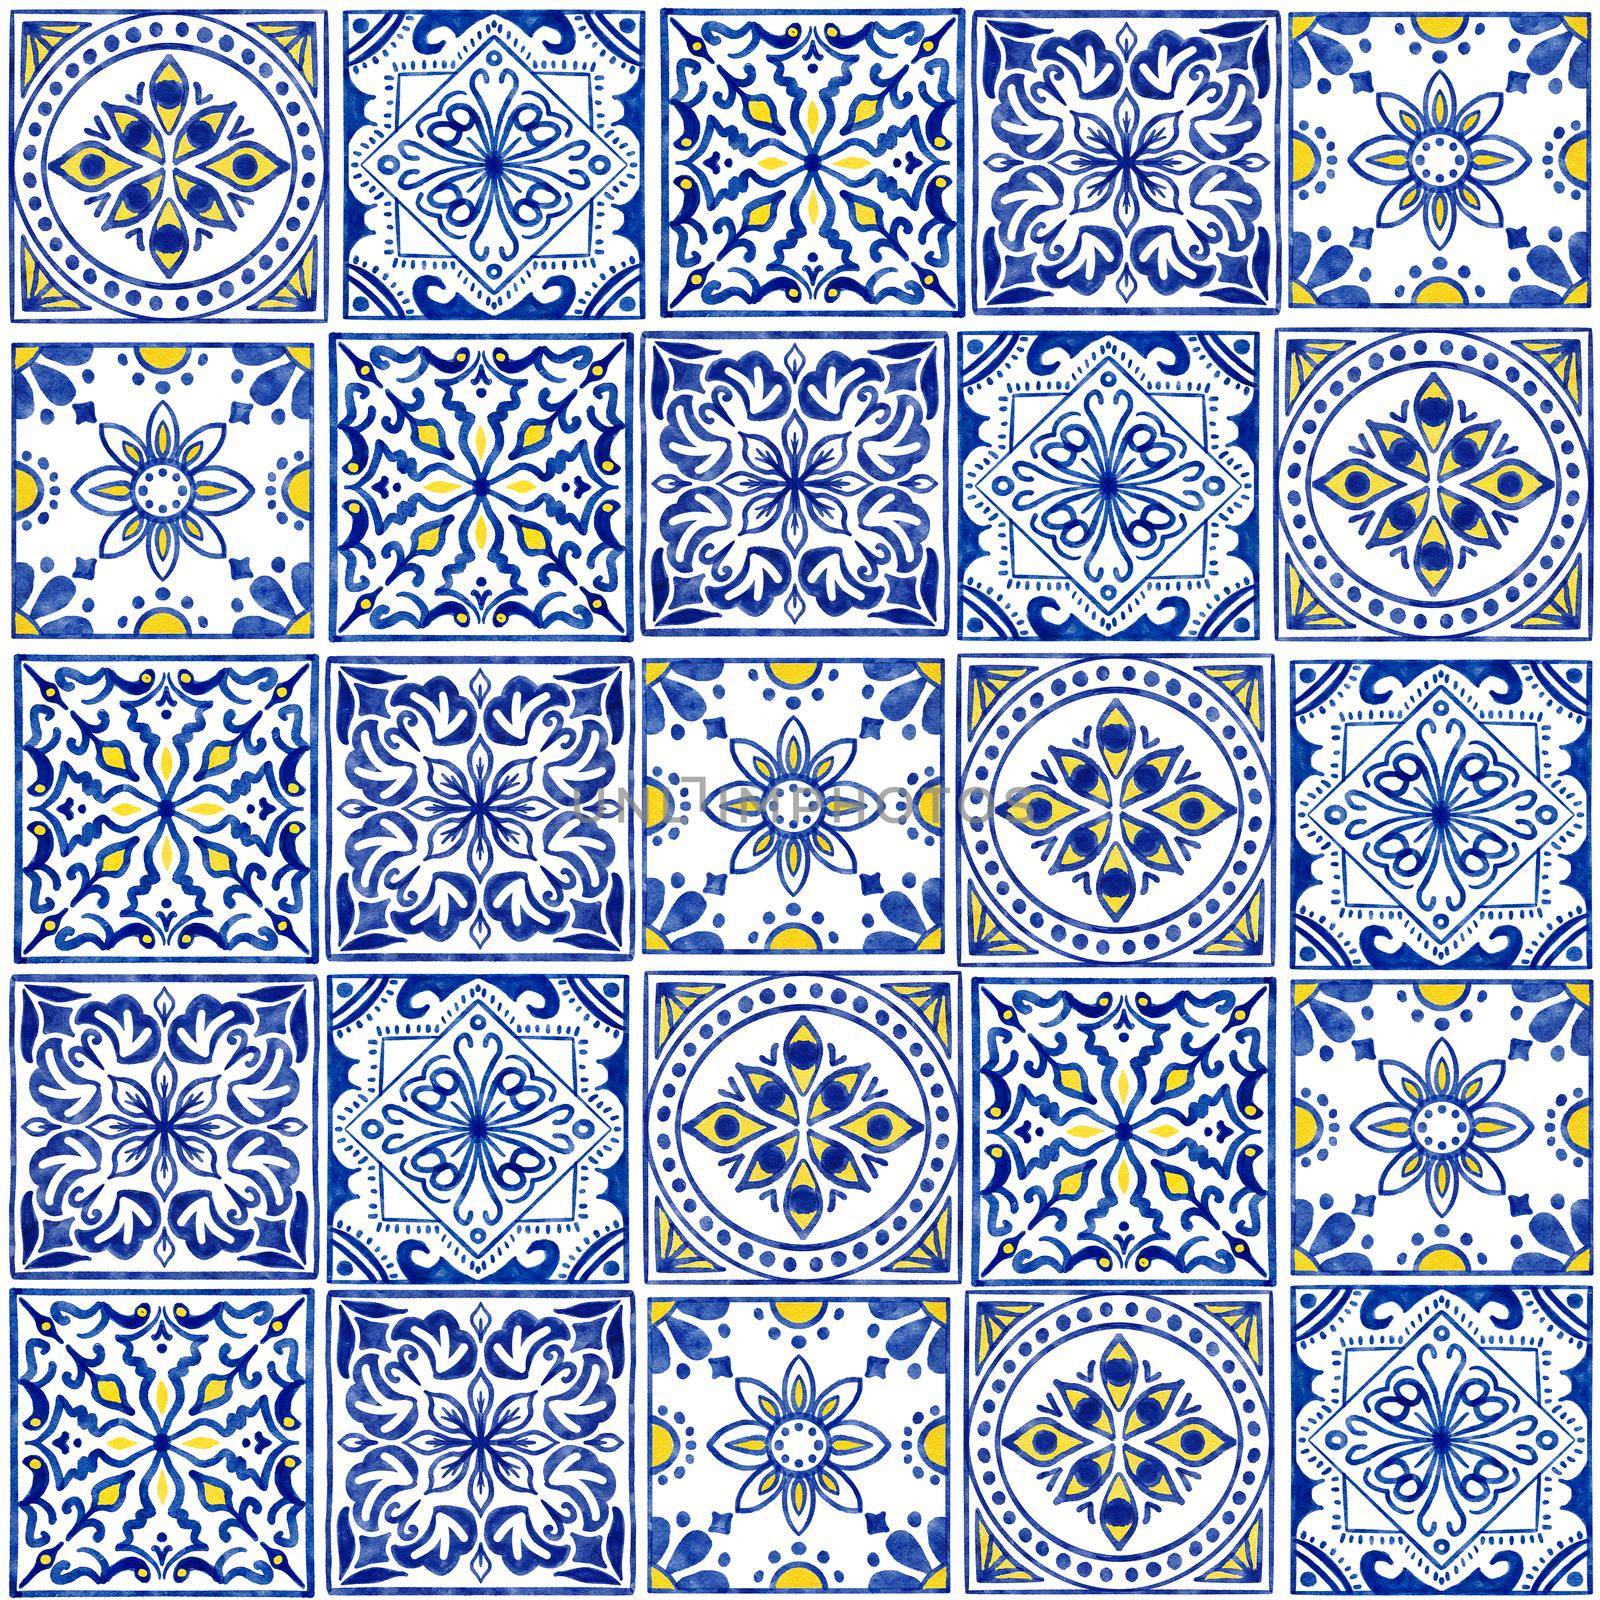 Hand drawn watercolor seamless pattern with blue white azulejo Portuguese ceramic traditional tiles. Ethnic portugal geomentric indigo repeated wall floor ornament. Arabic ornamental background